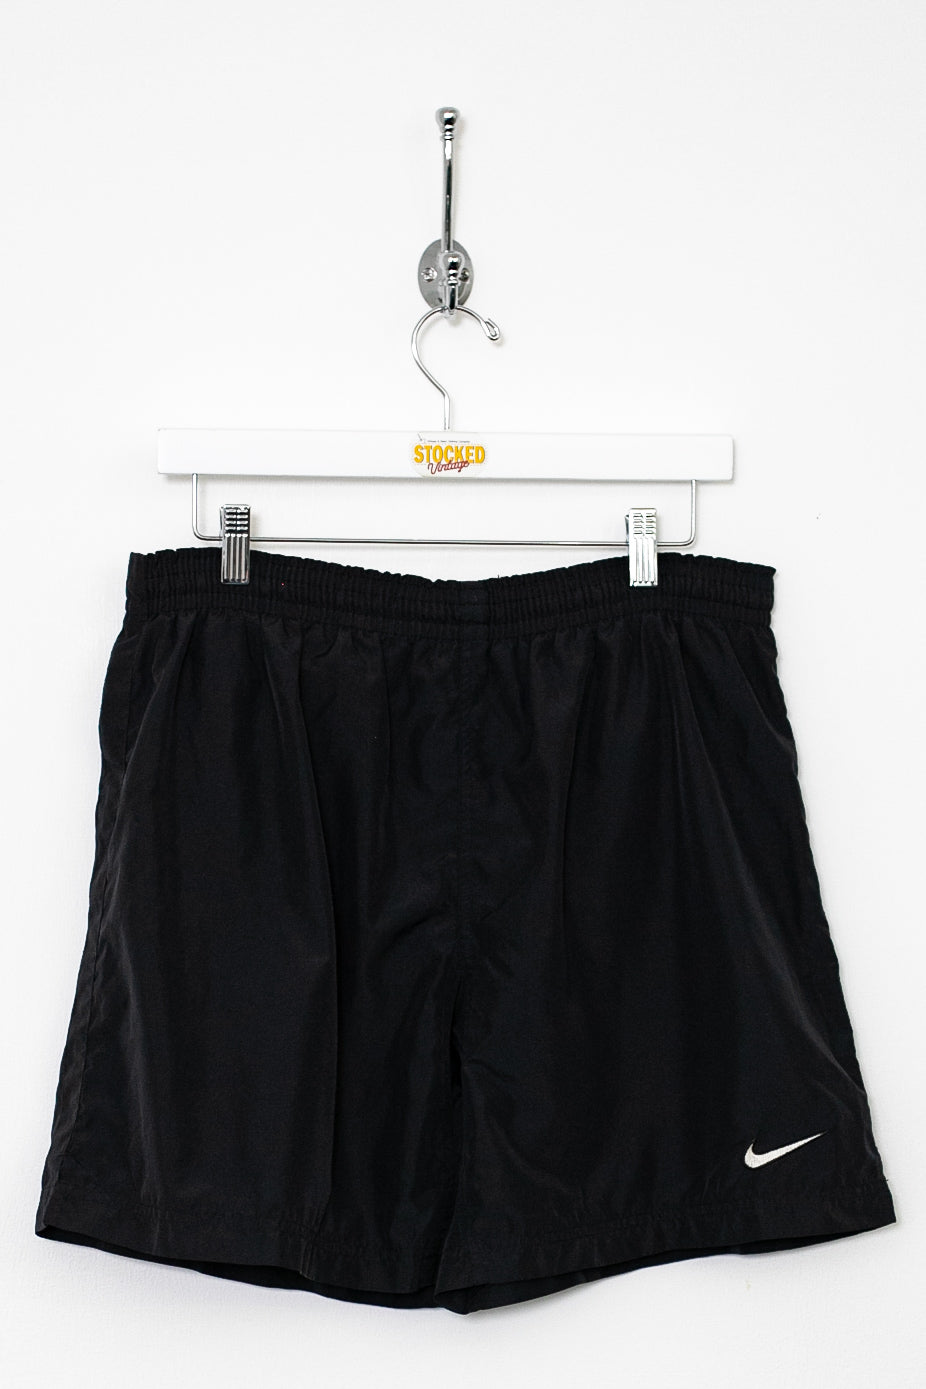 00s Nike Shorts (M)